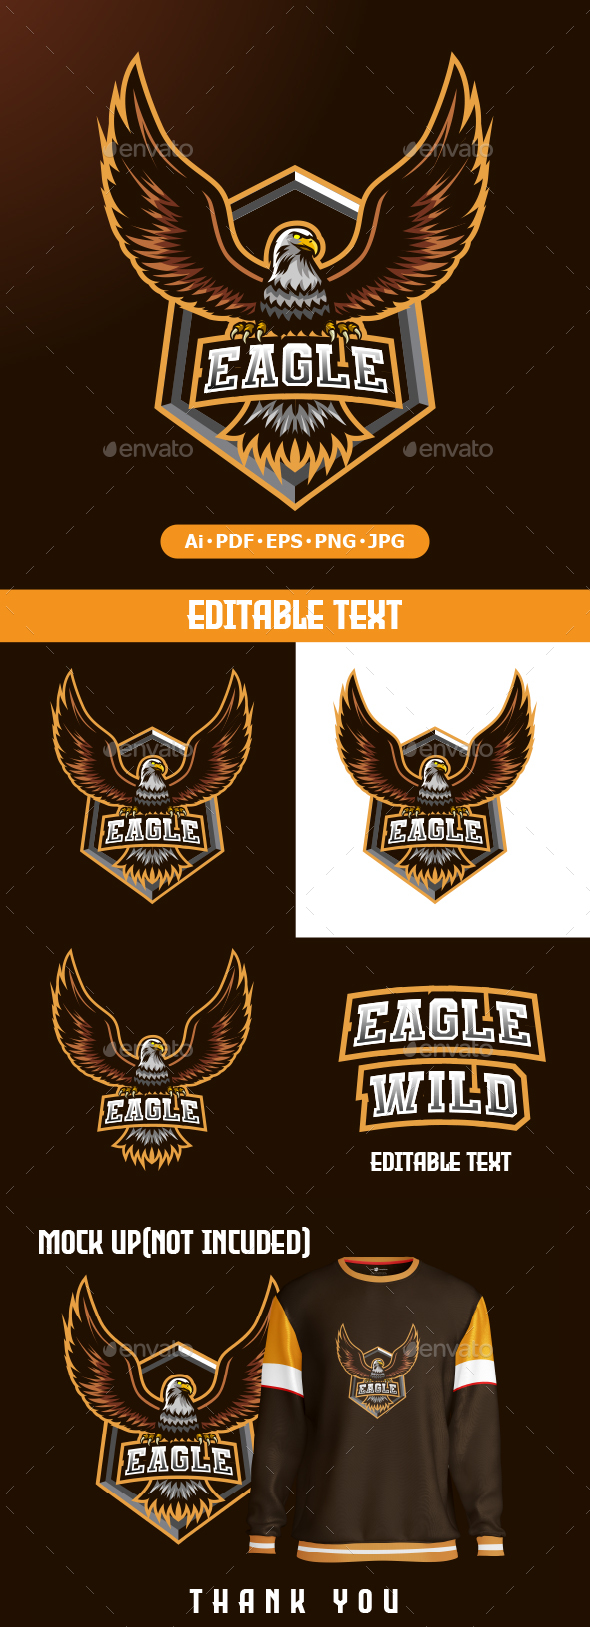 Eagle logo mascot for eSport